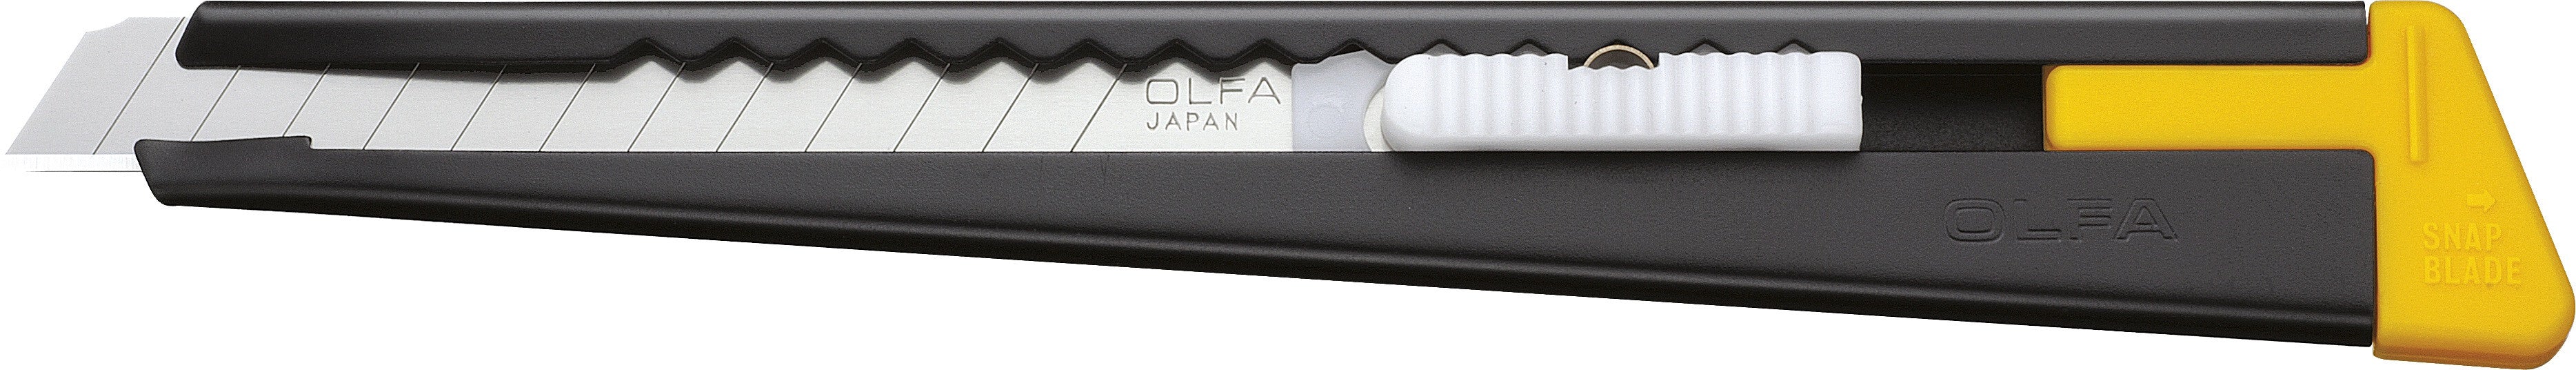 Olfa cutter 9 mm c/cursore art. 180 b ITW CONSTRUCTION PRODUCT